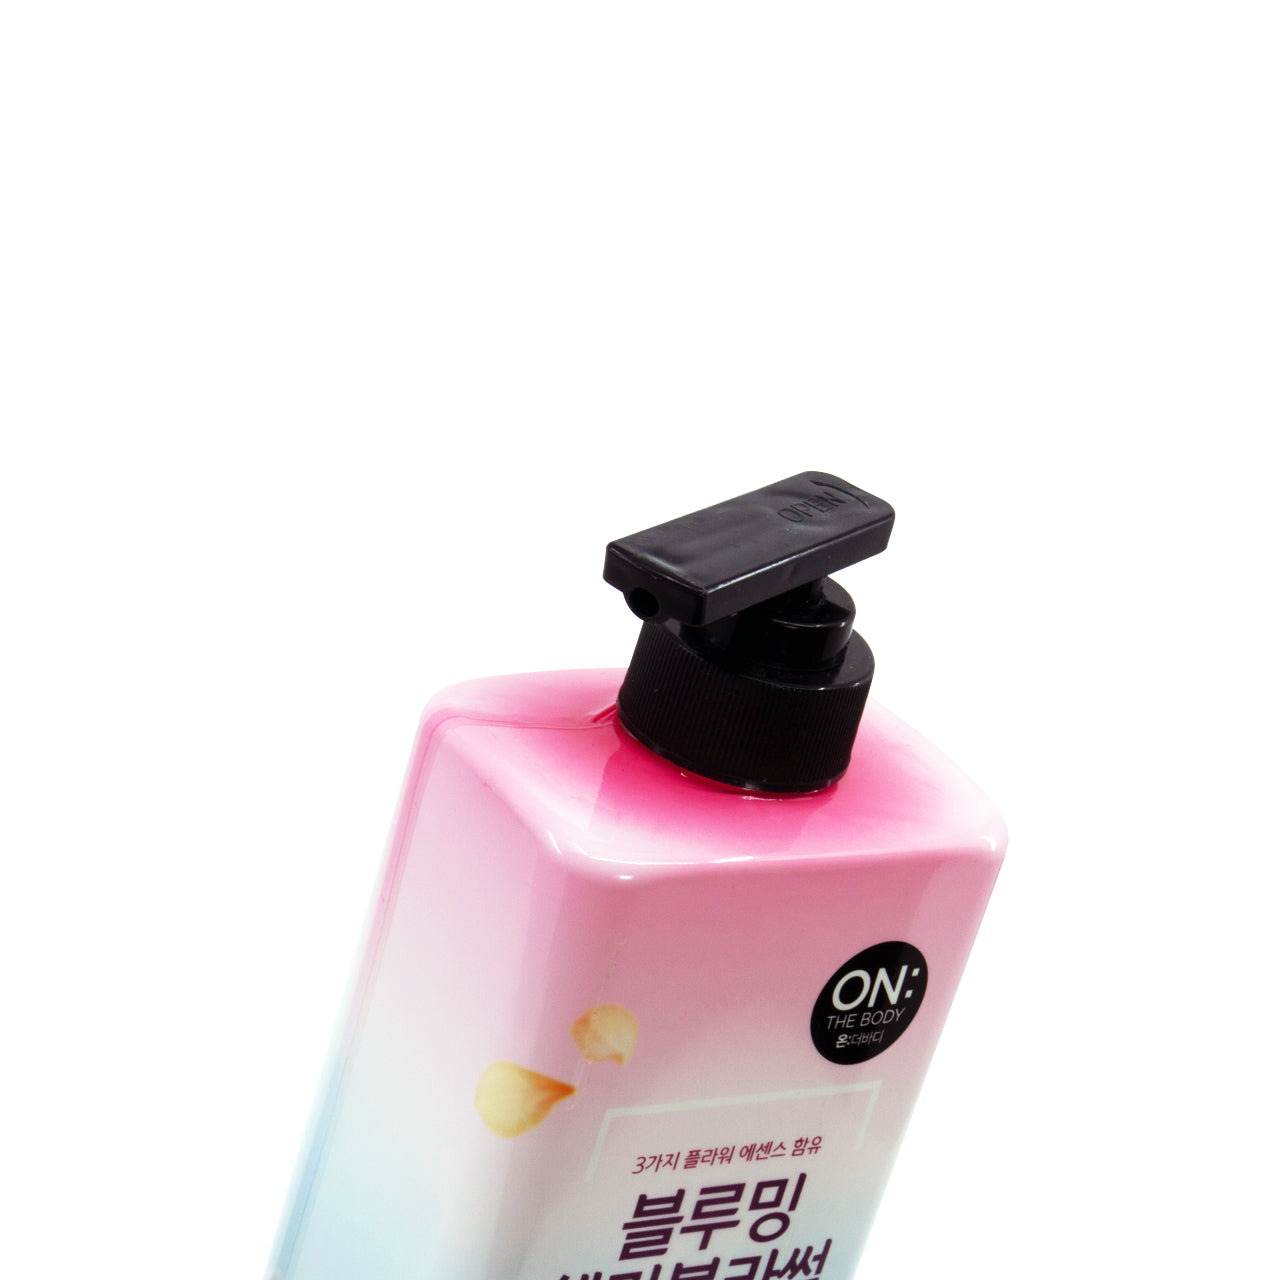 On The Body Blooming Cherry Blossom Body Wash 900G | Sasa Global eShop